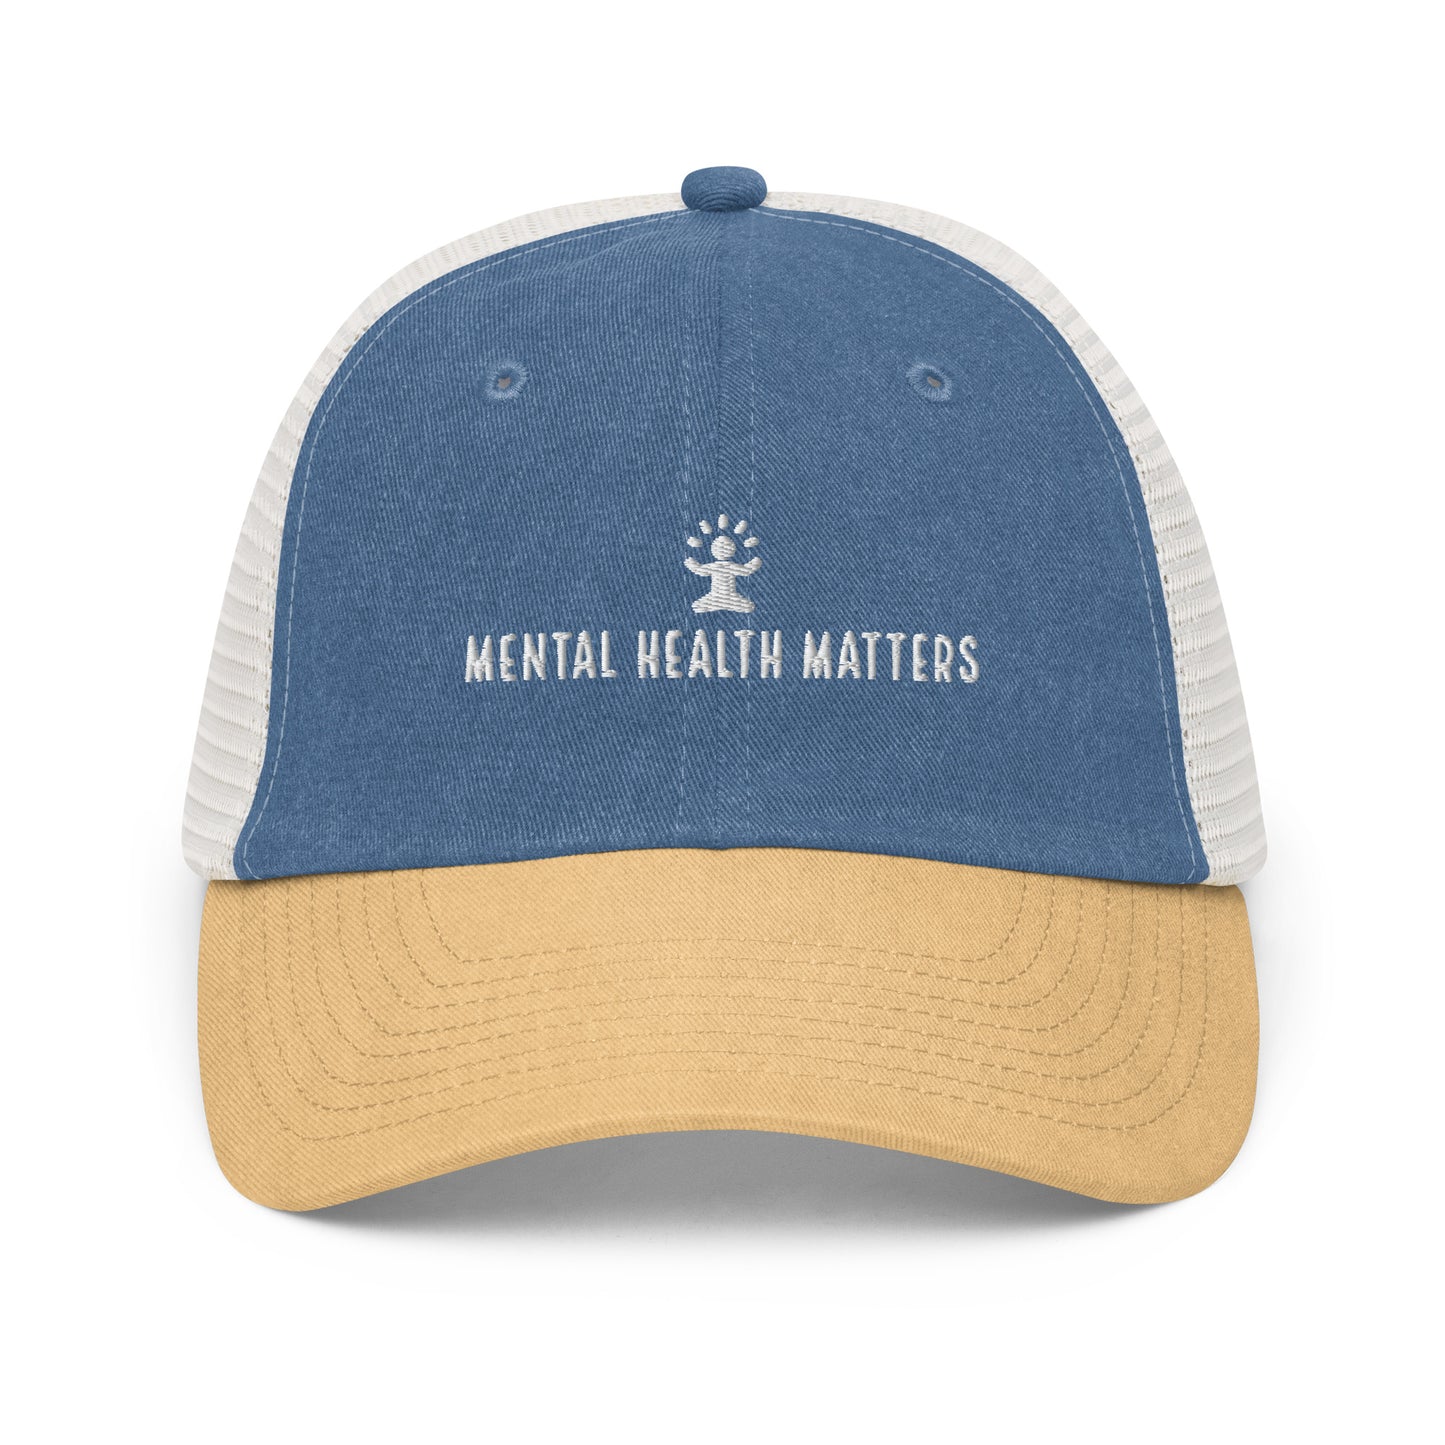 Mentals Matter Hat - Yellow Front